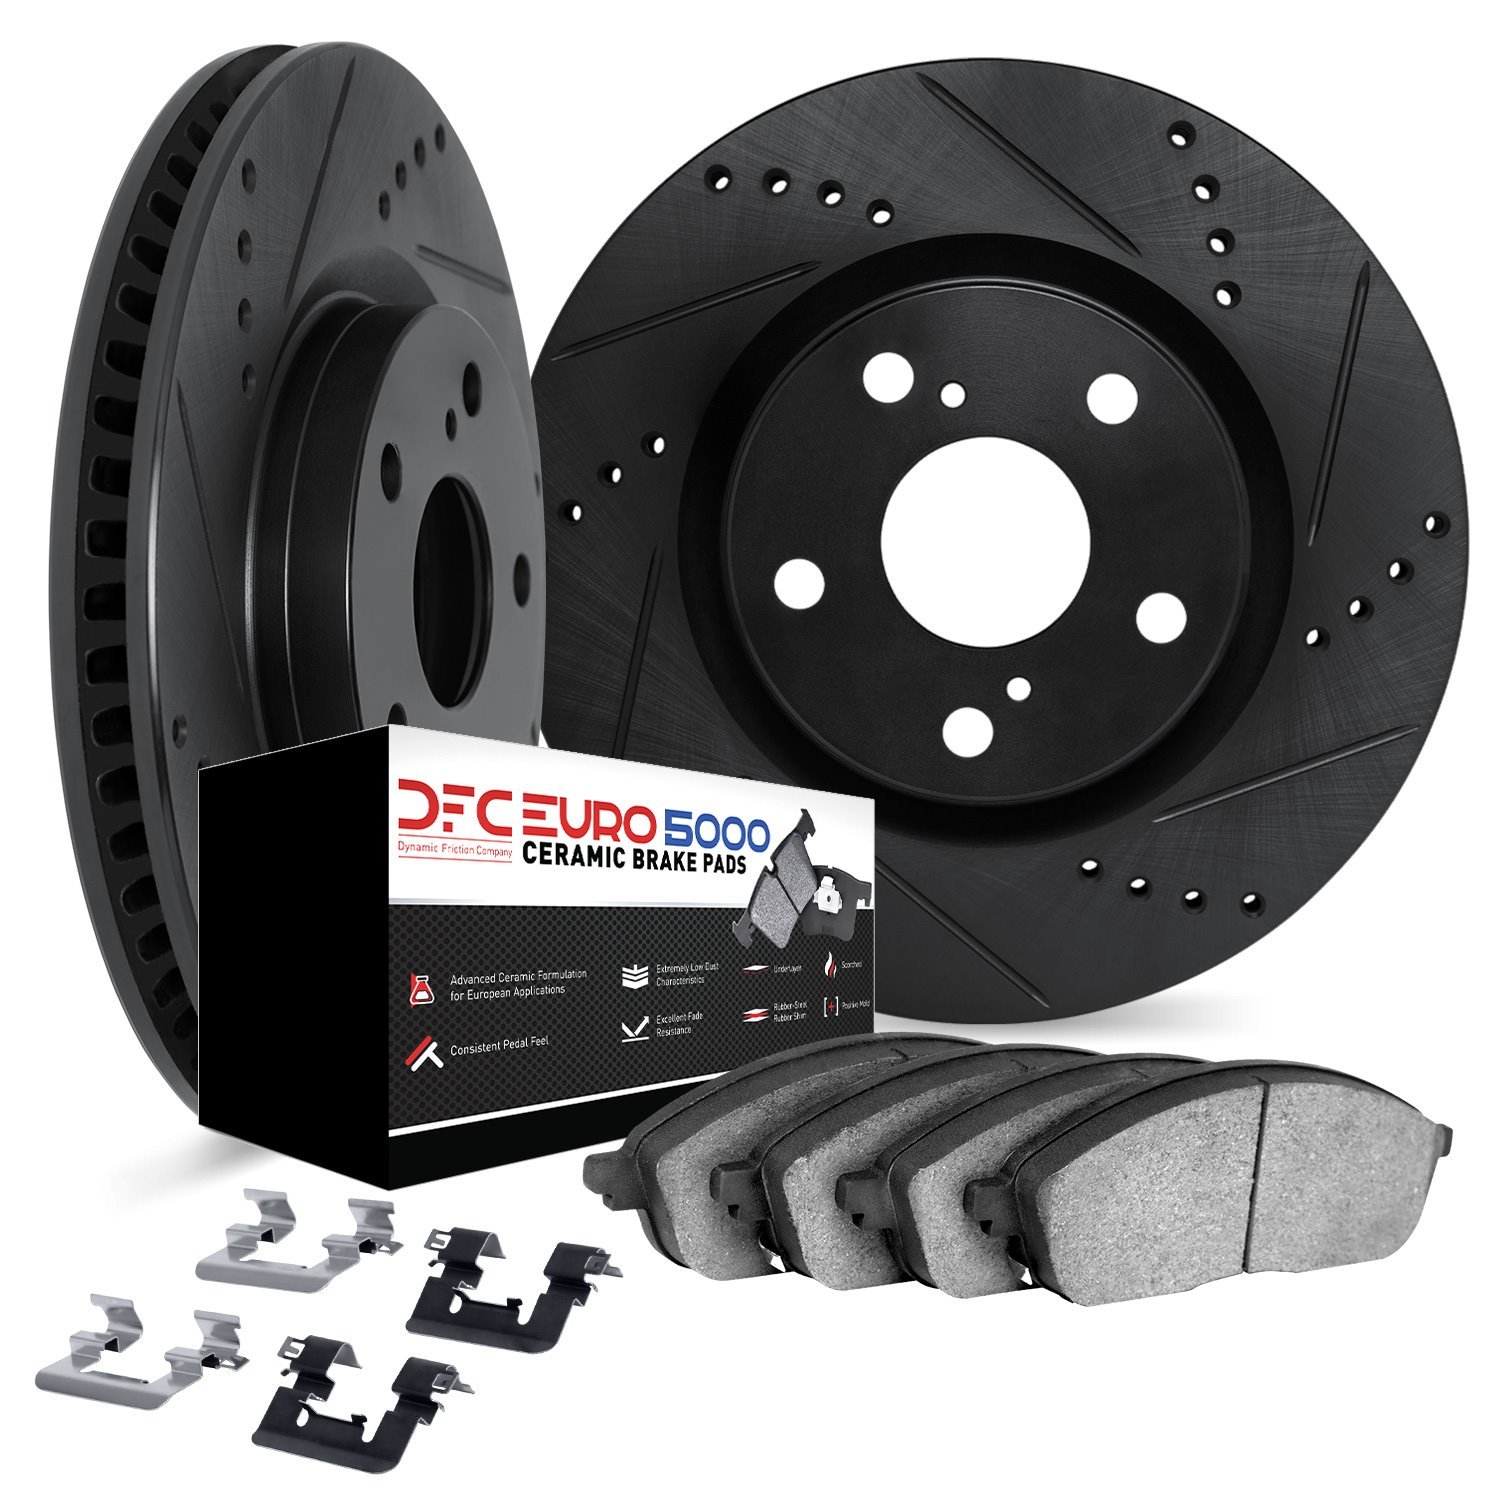 8612-75010 Drilled/Slotted Brake Rotors w/5000 Euro Ceramic Brake Pads Kit & Hardware [Black], Fits Select Lexus/Toyota/Scion, P